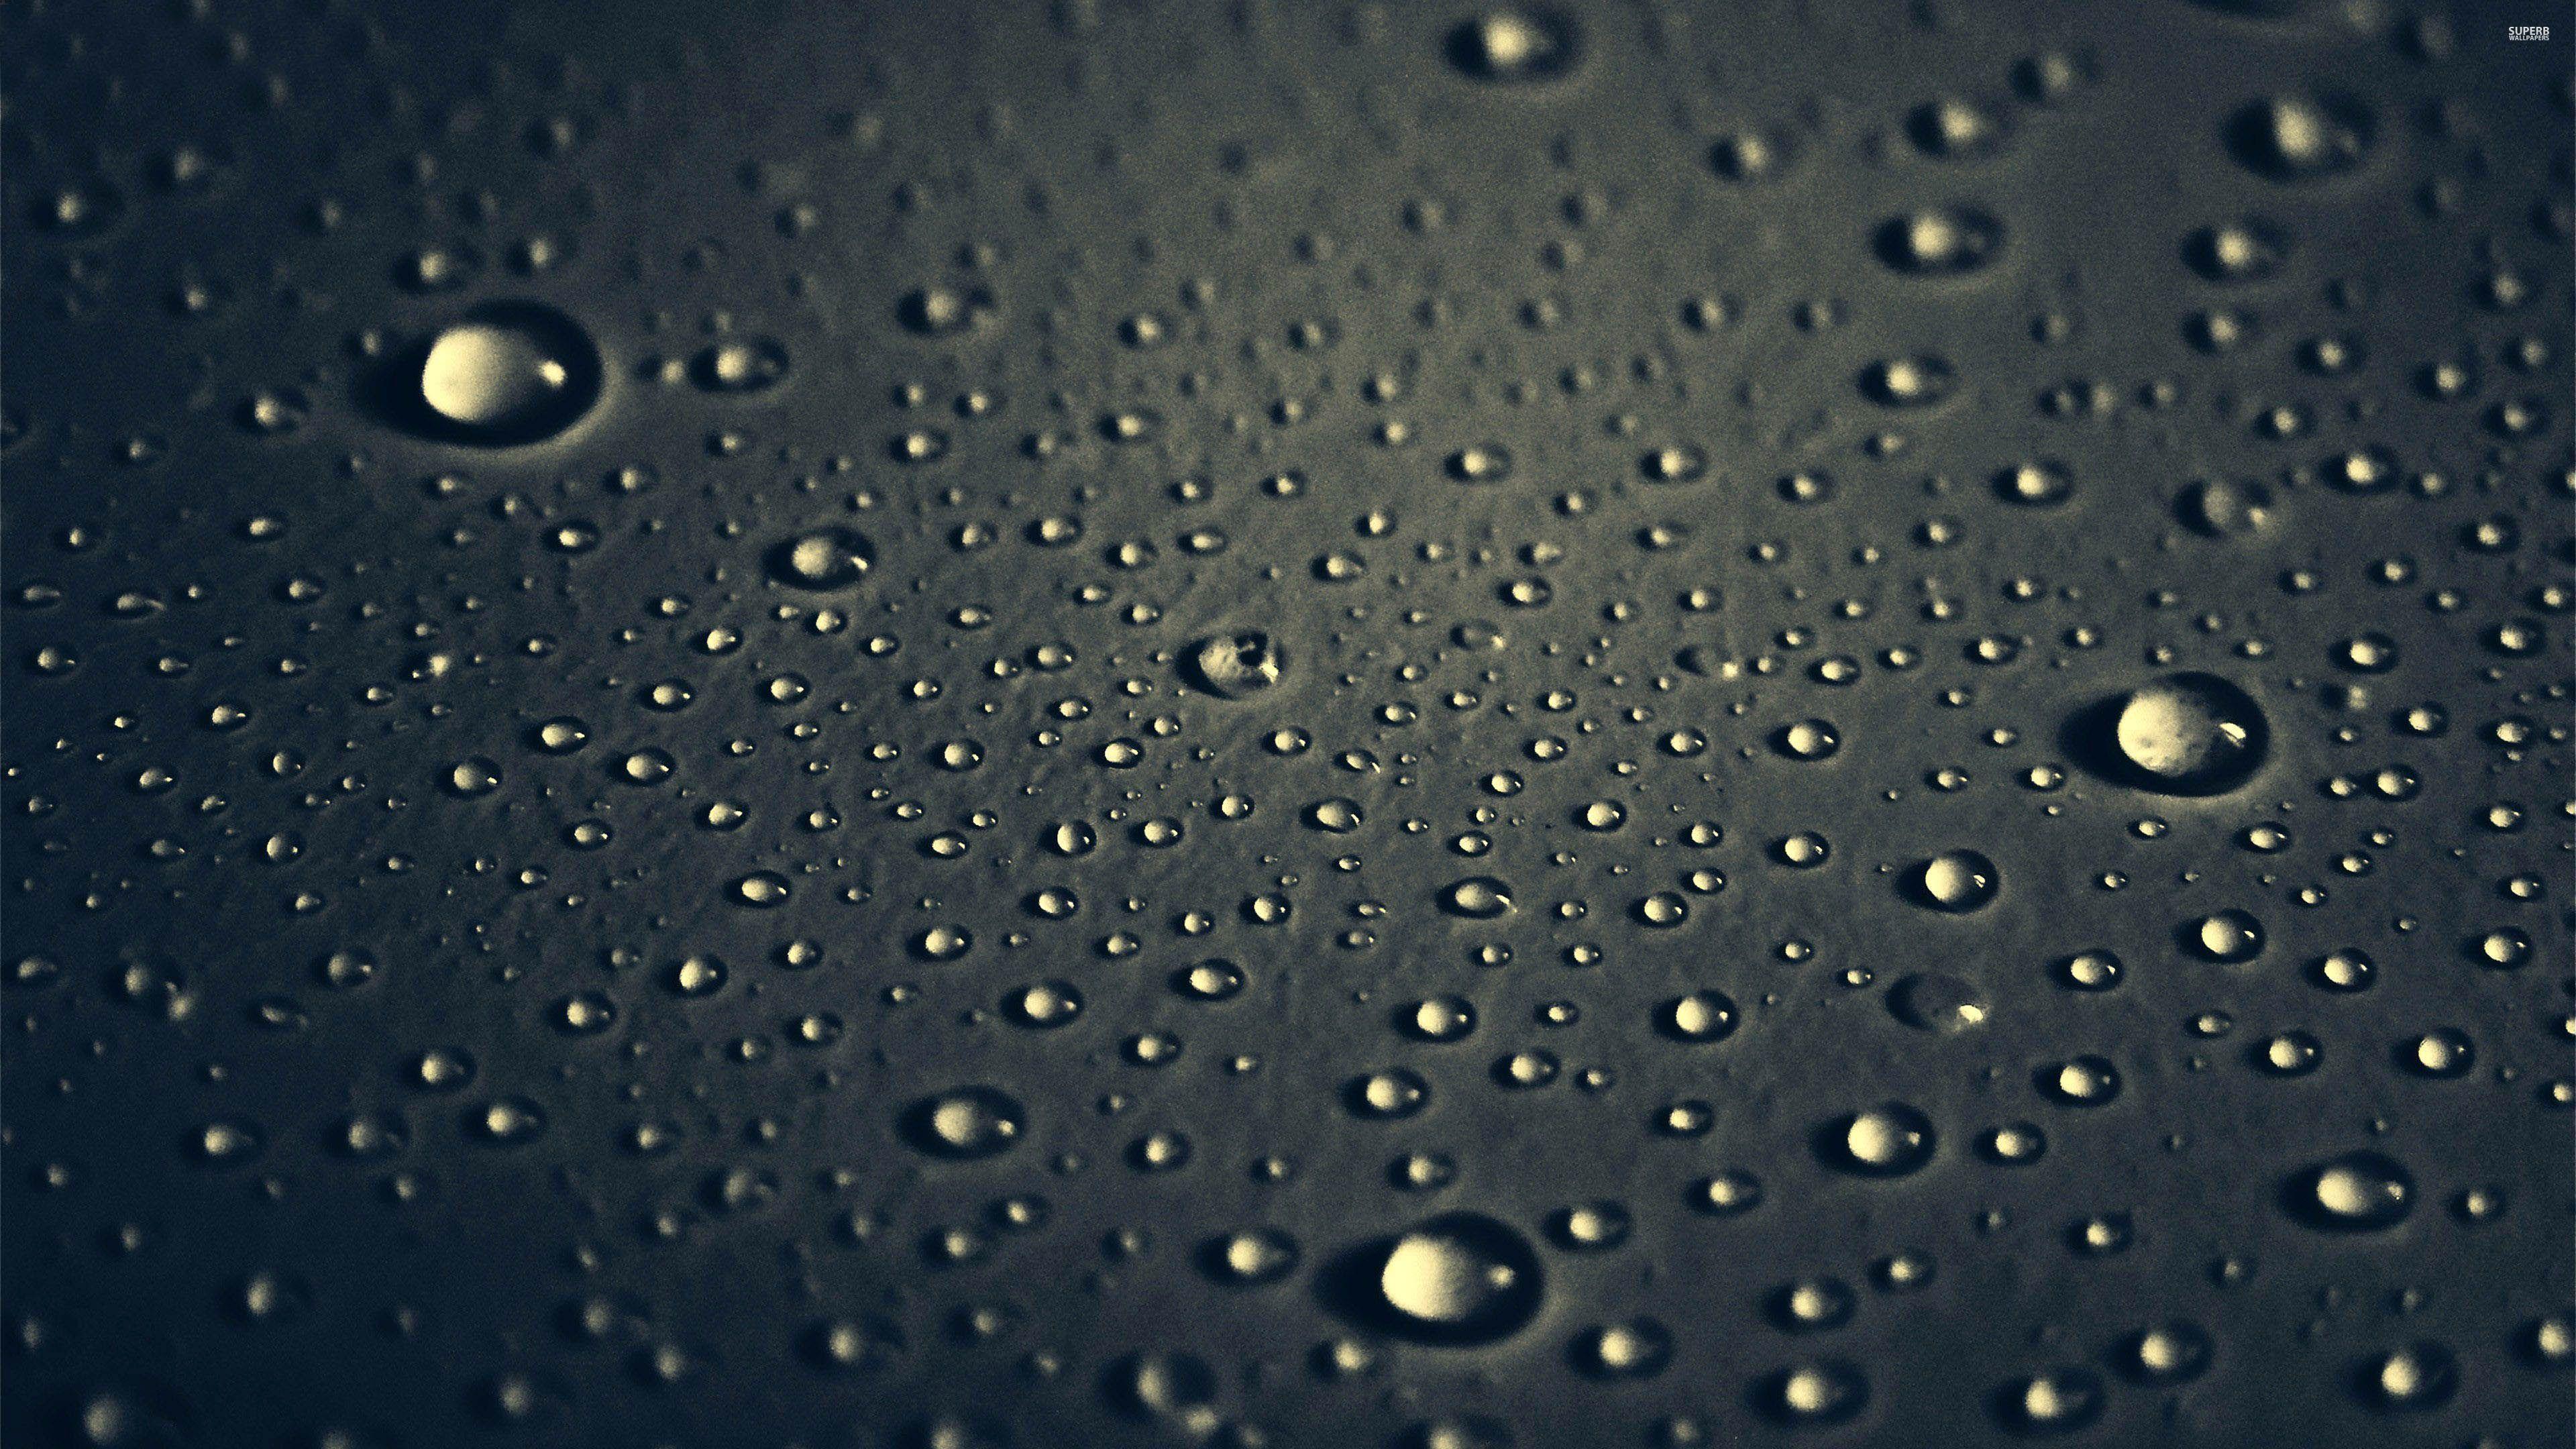 Water Drops On Dark Surface 16 9 Ultra HD, UHD